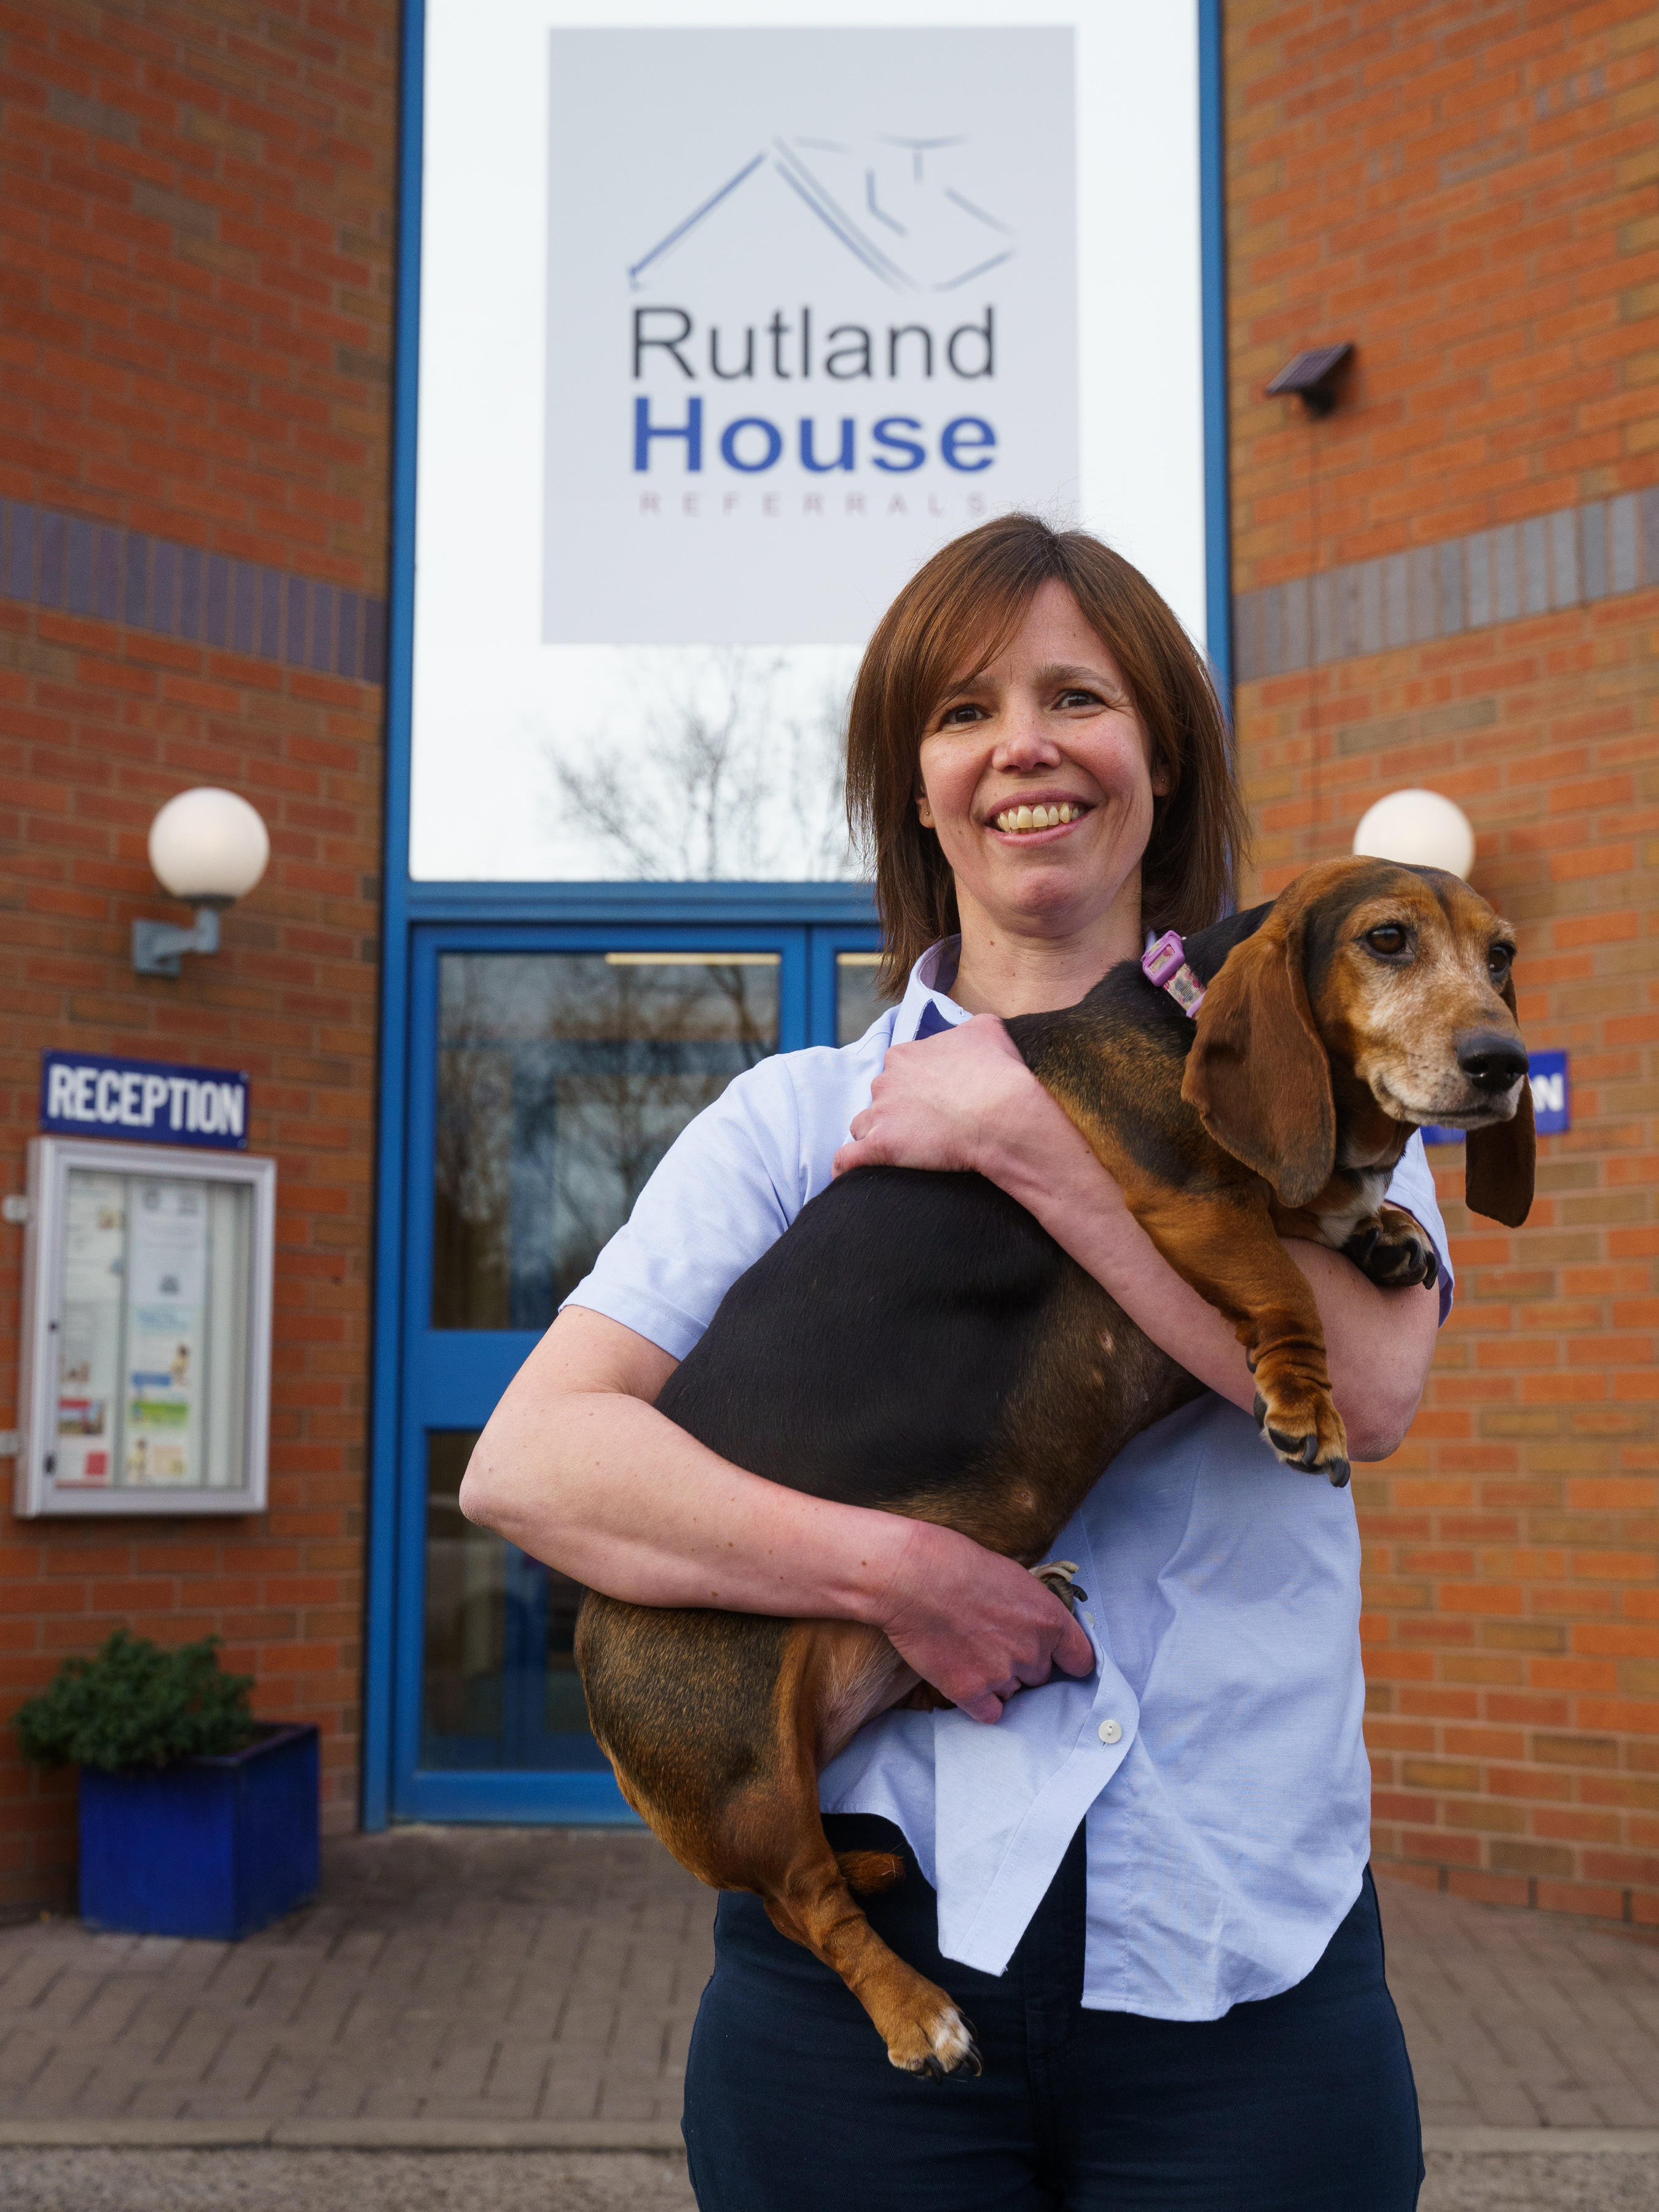 Images Rutland House Veterinary Clinic & Aquazone, Freckleton